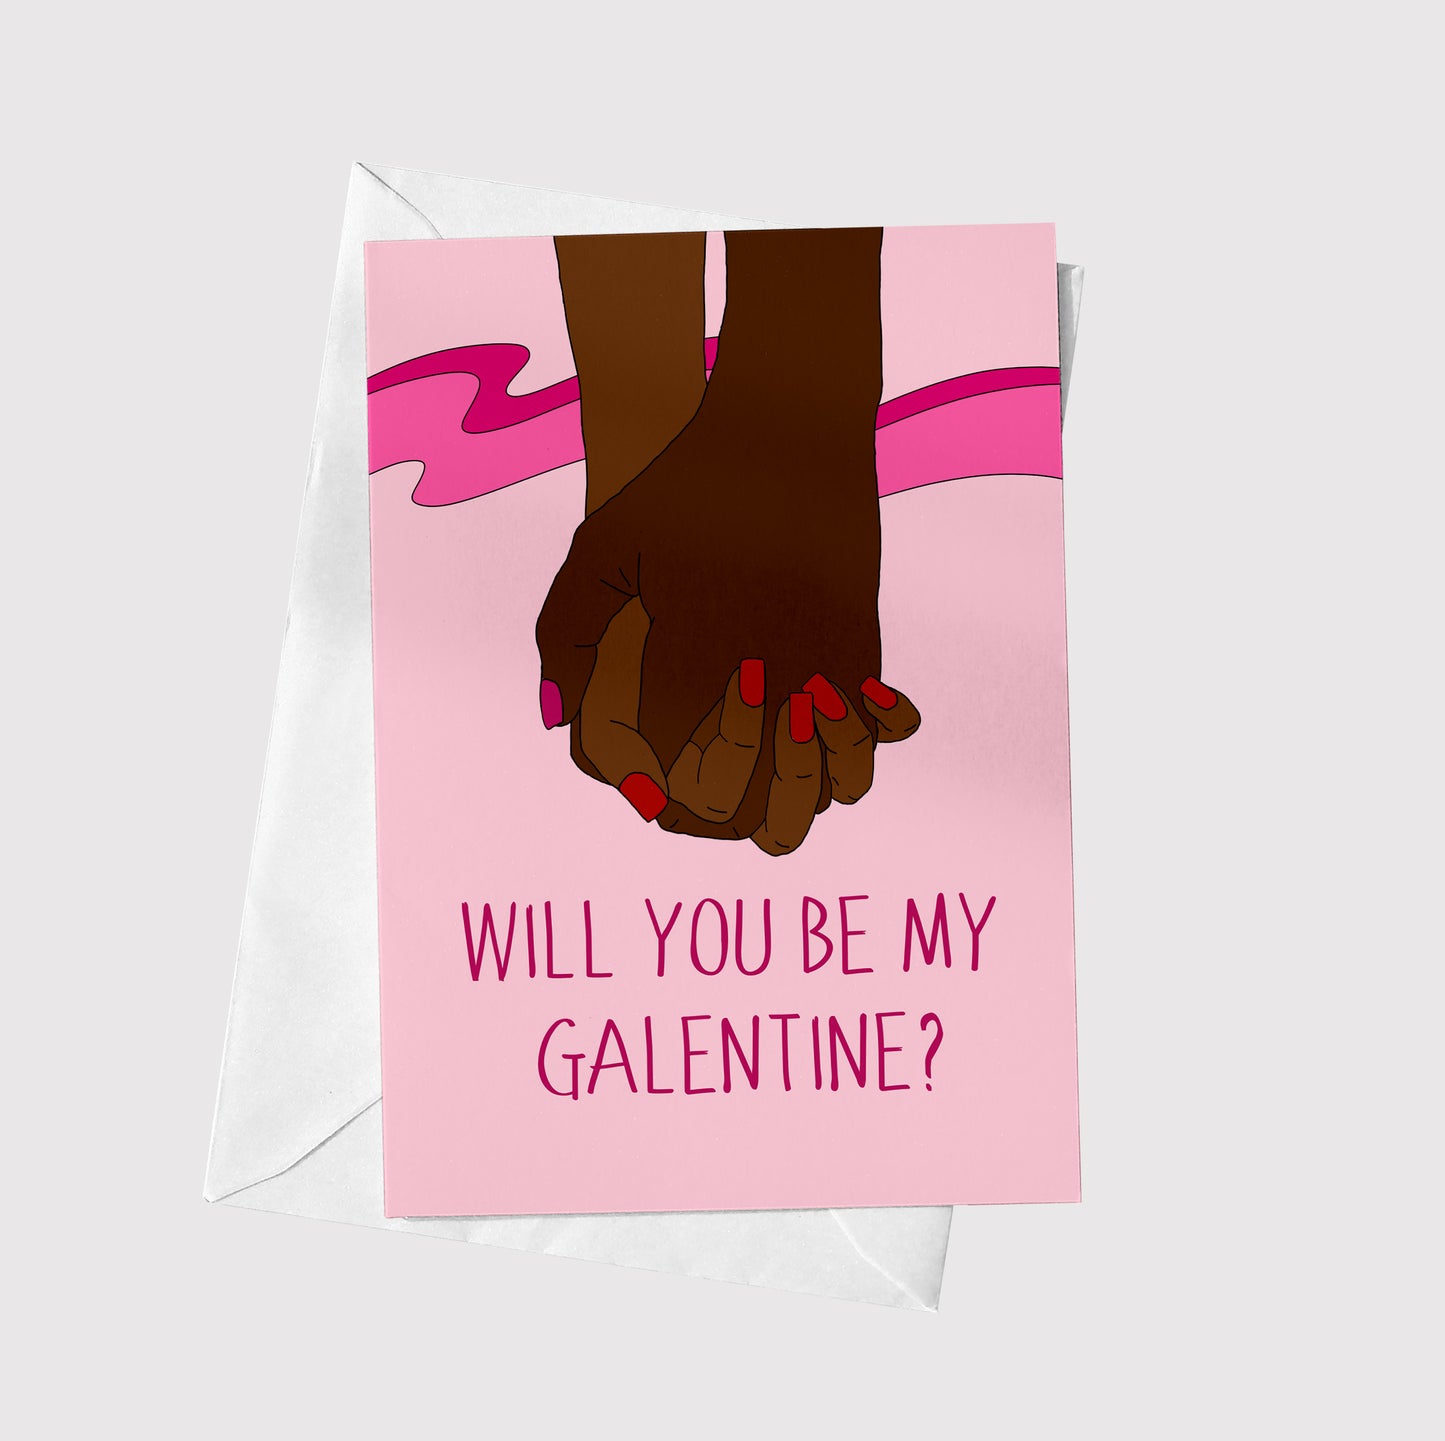 Be my Galentine